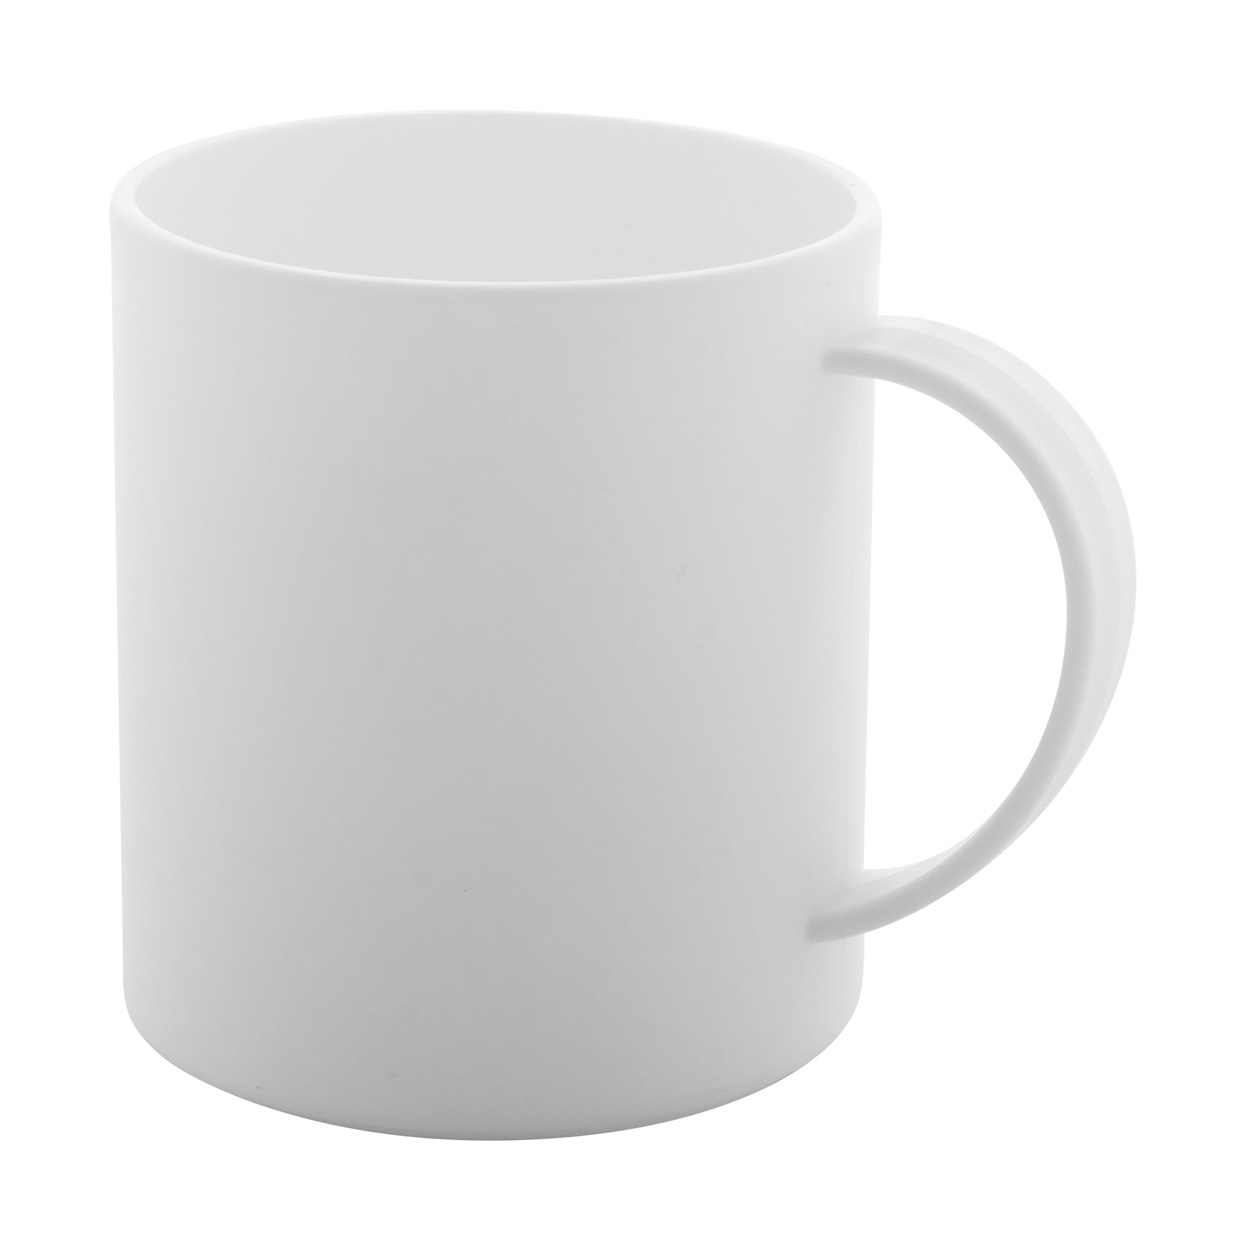 Plantex anti-bacterial mug White